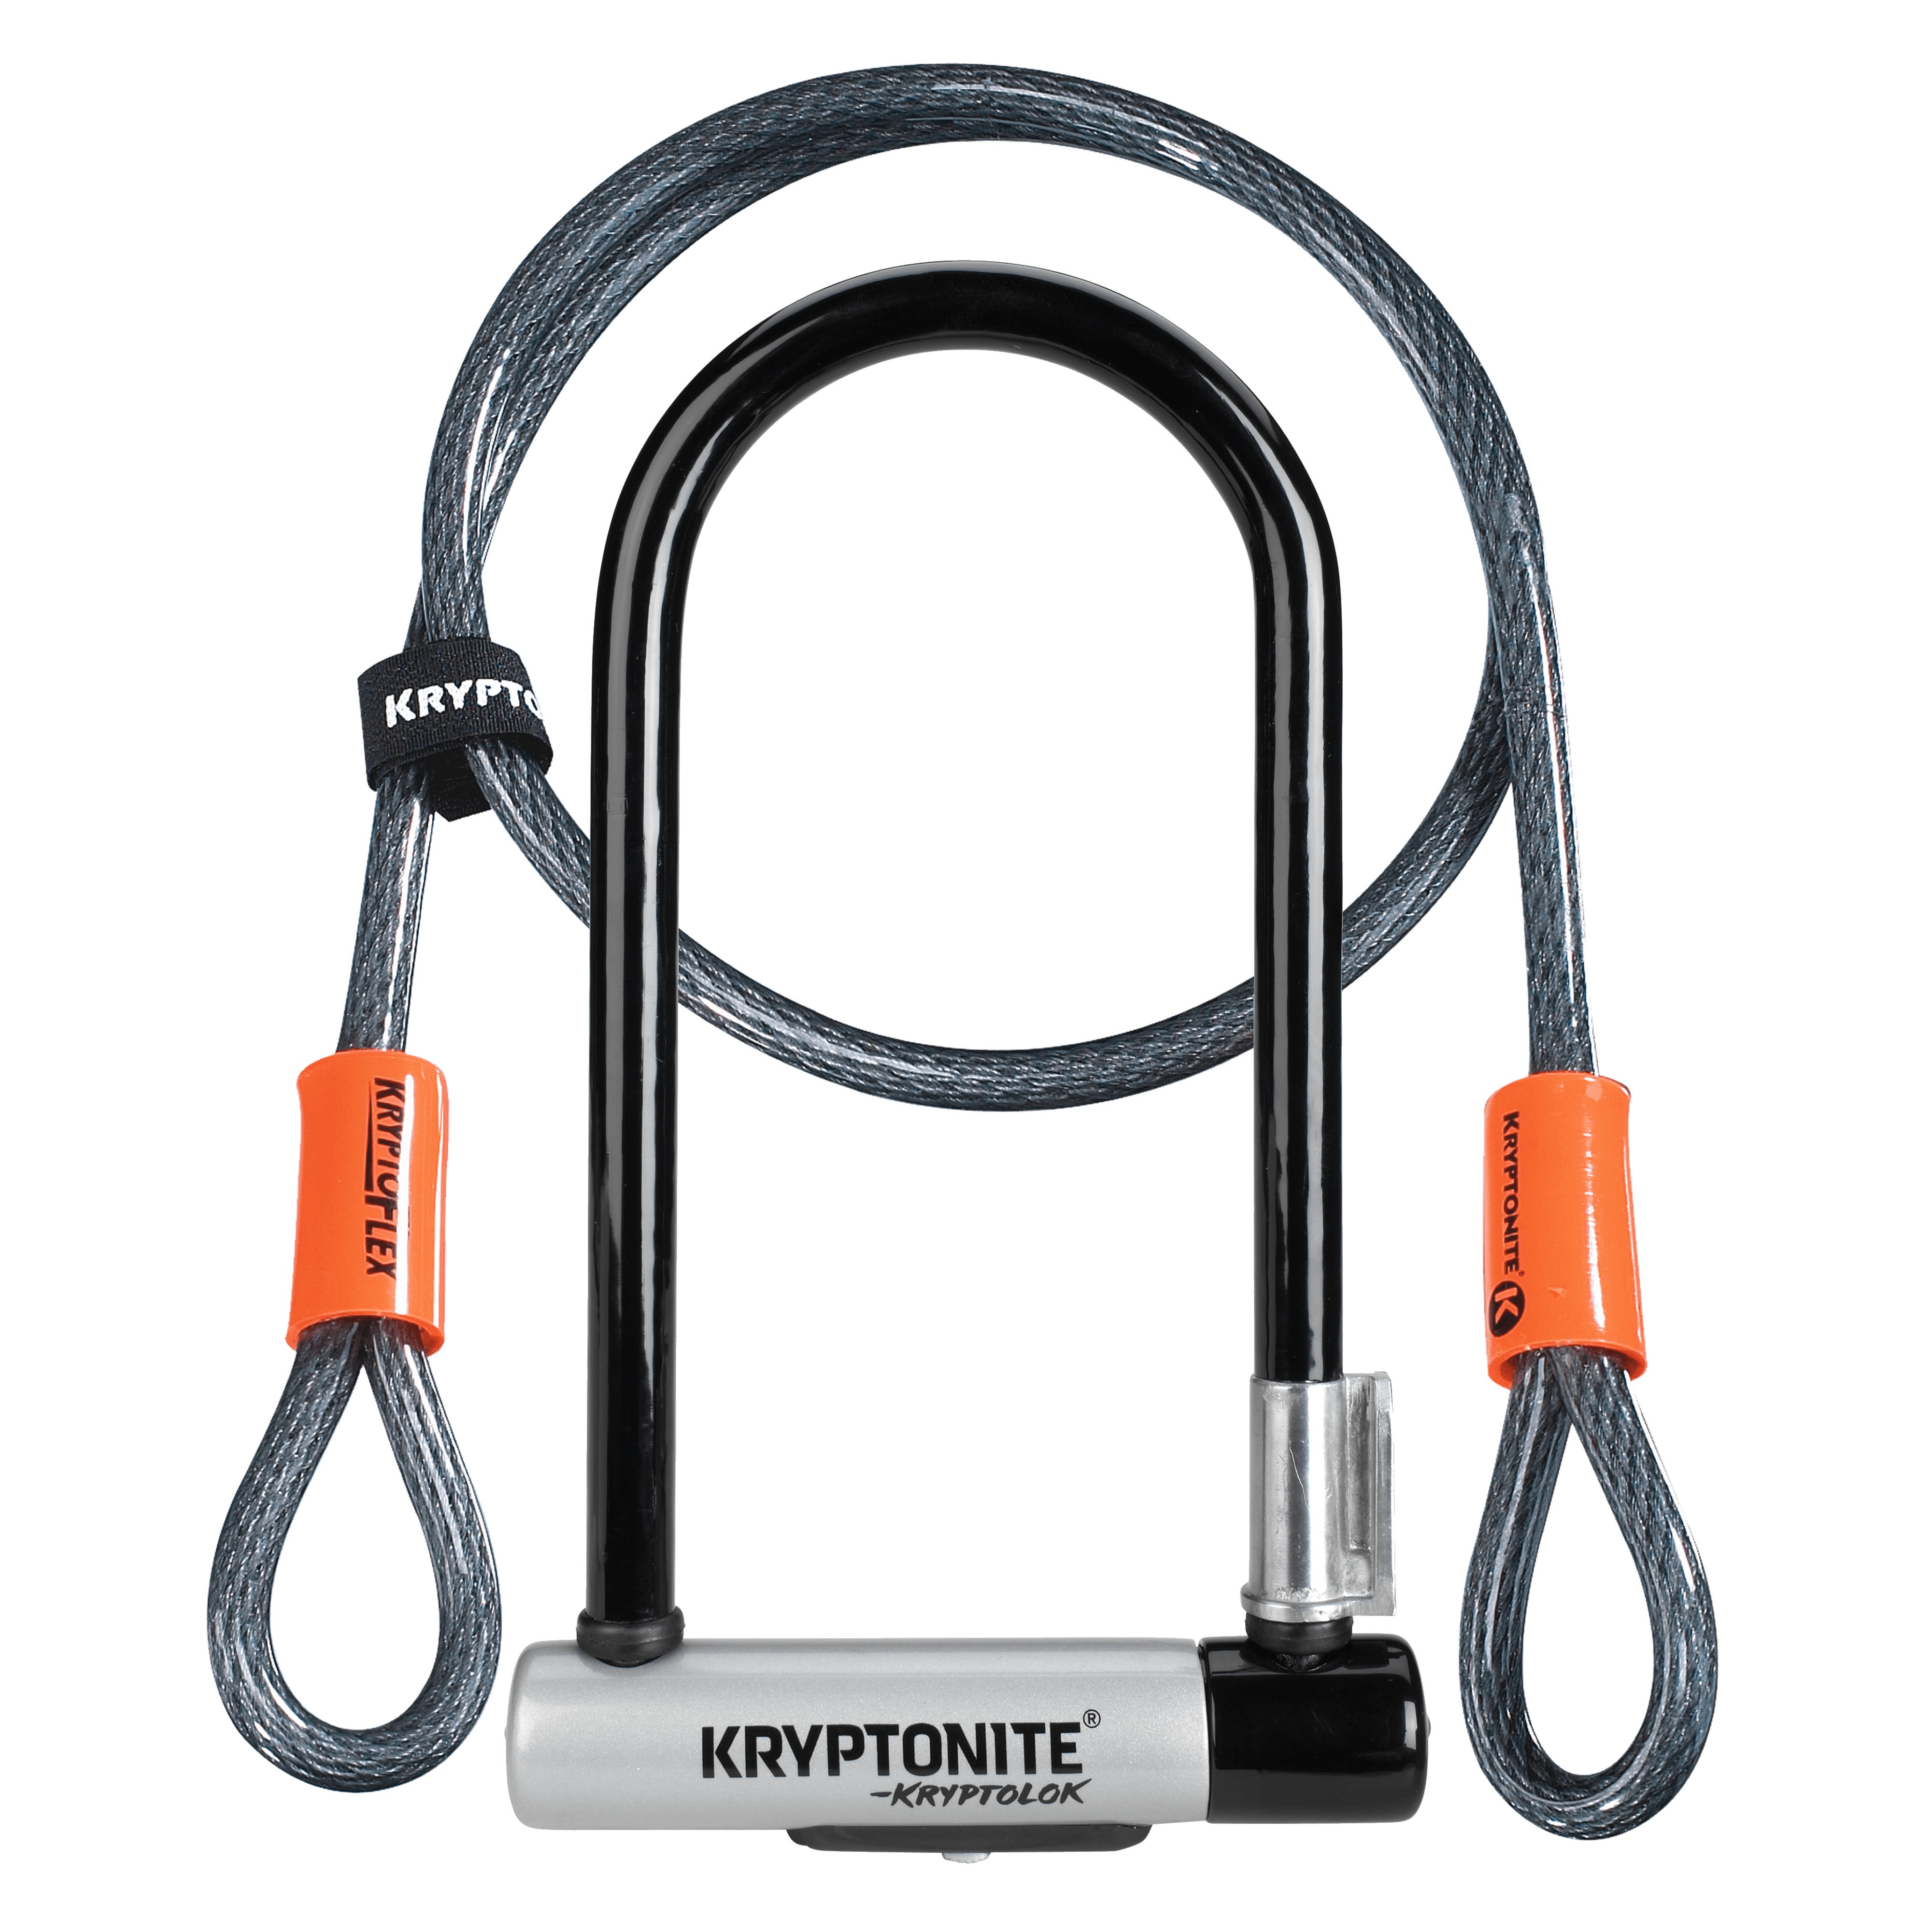 Kryptonite KryptoLok Standard U-Lock with 4' Flex Cable Accessories - Locks